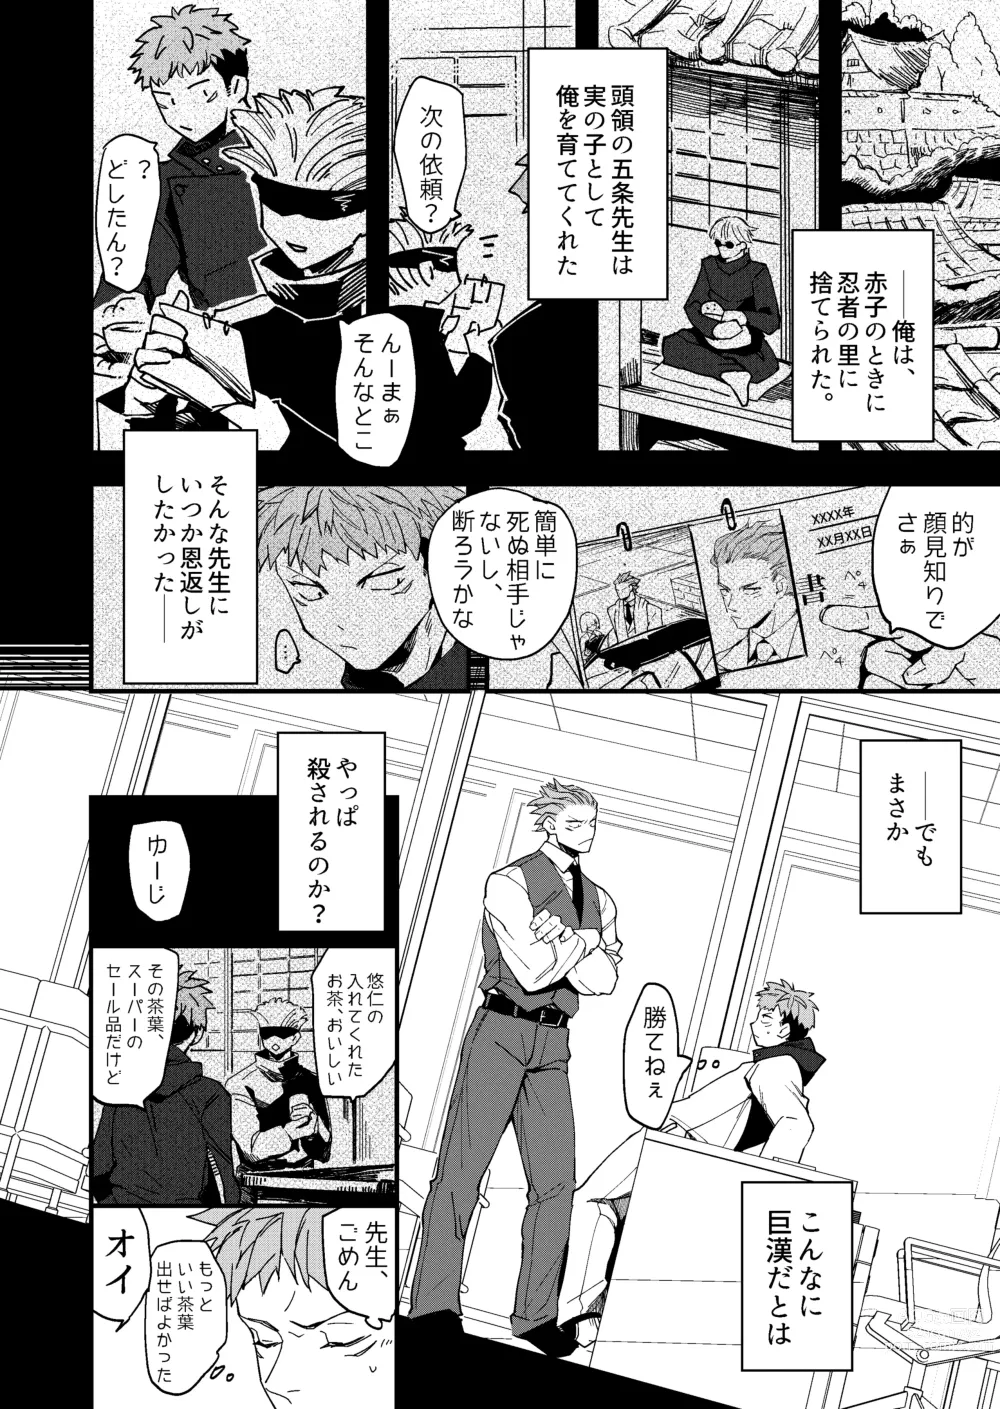 Page 5 of doujinshi Kanzen haiboku